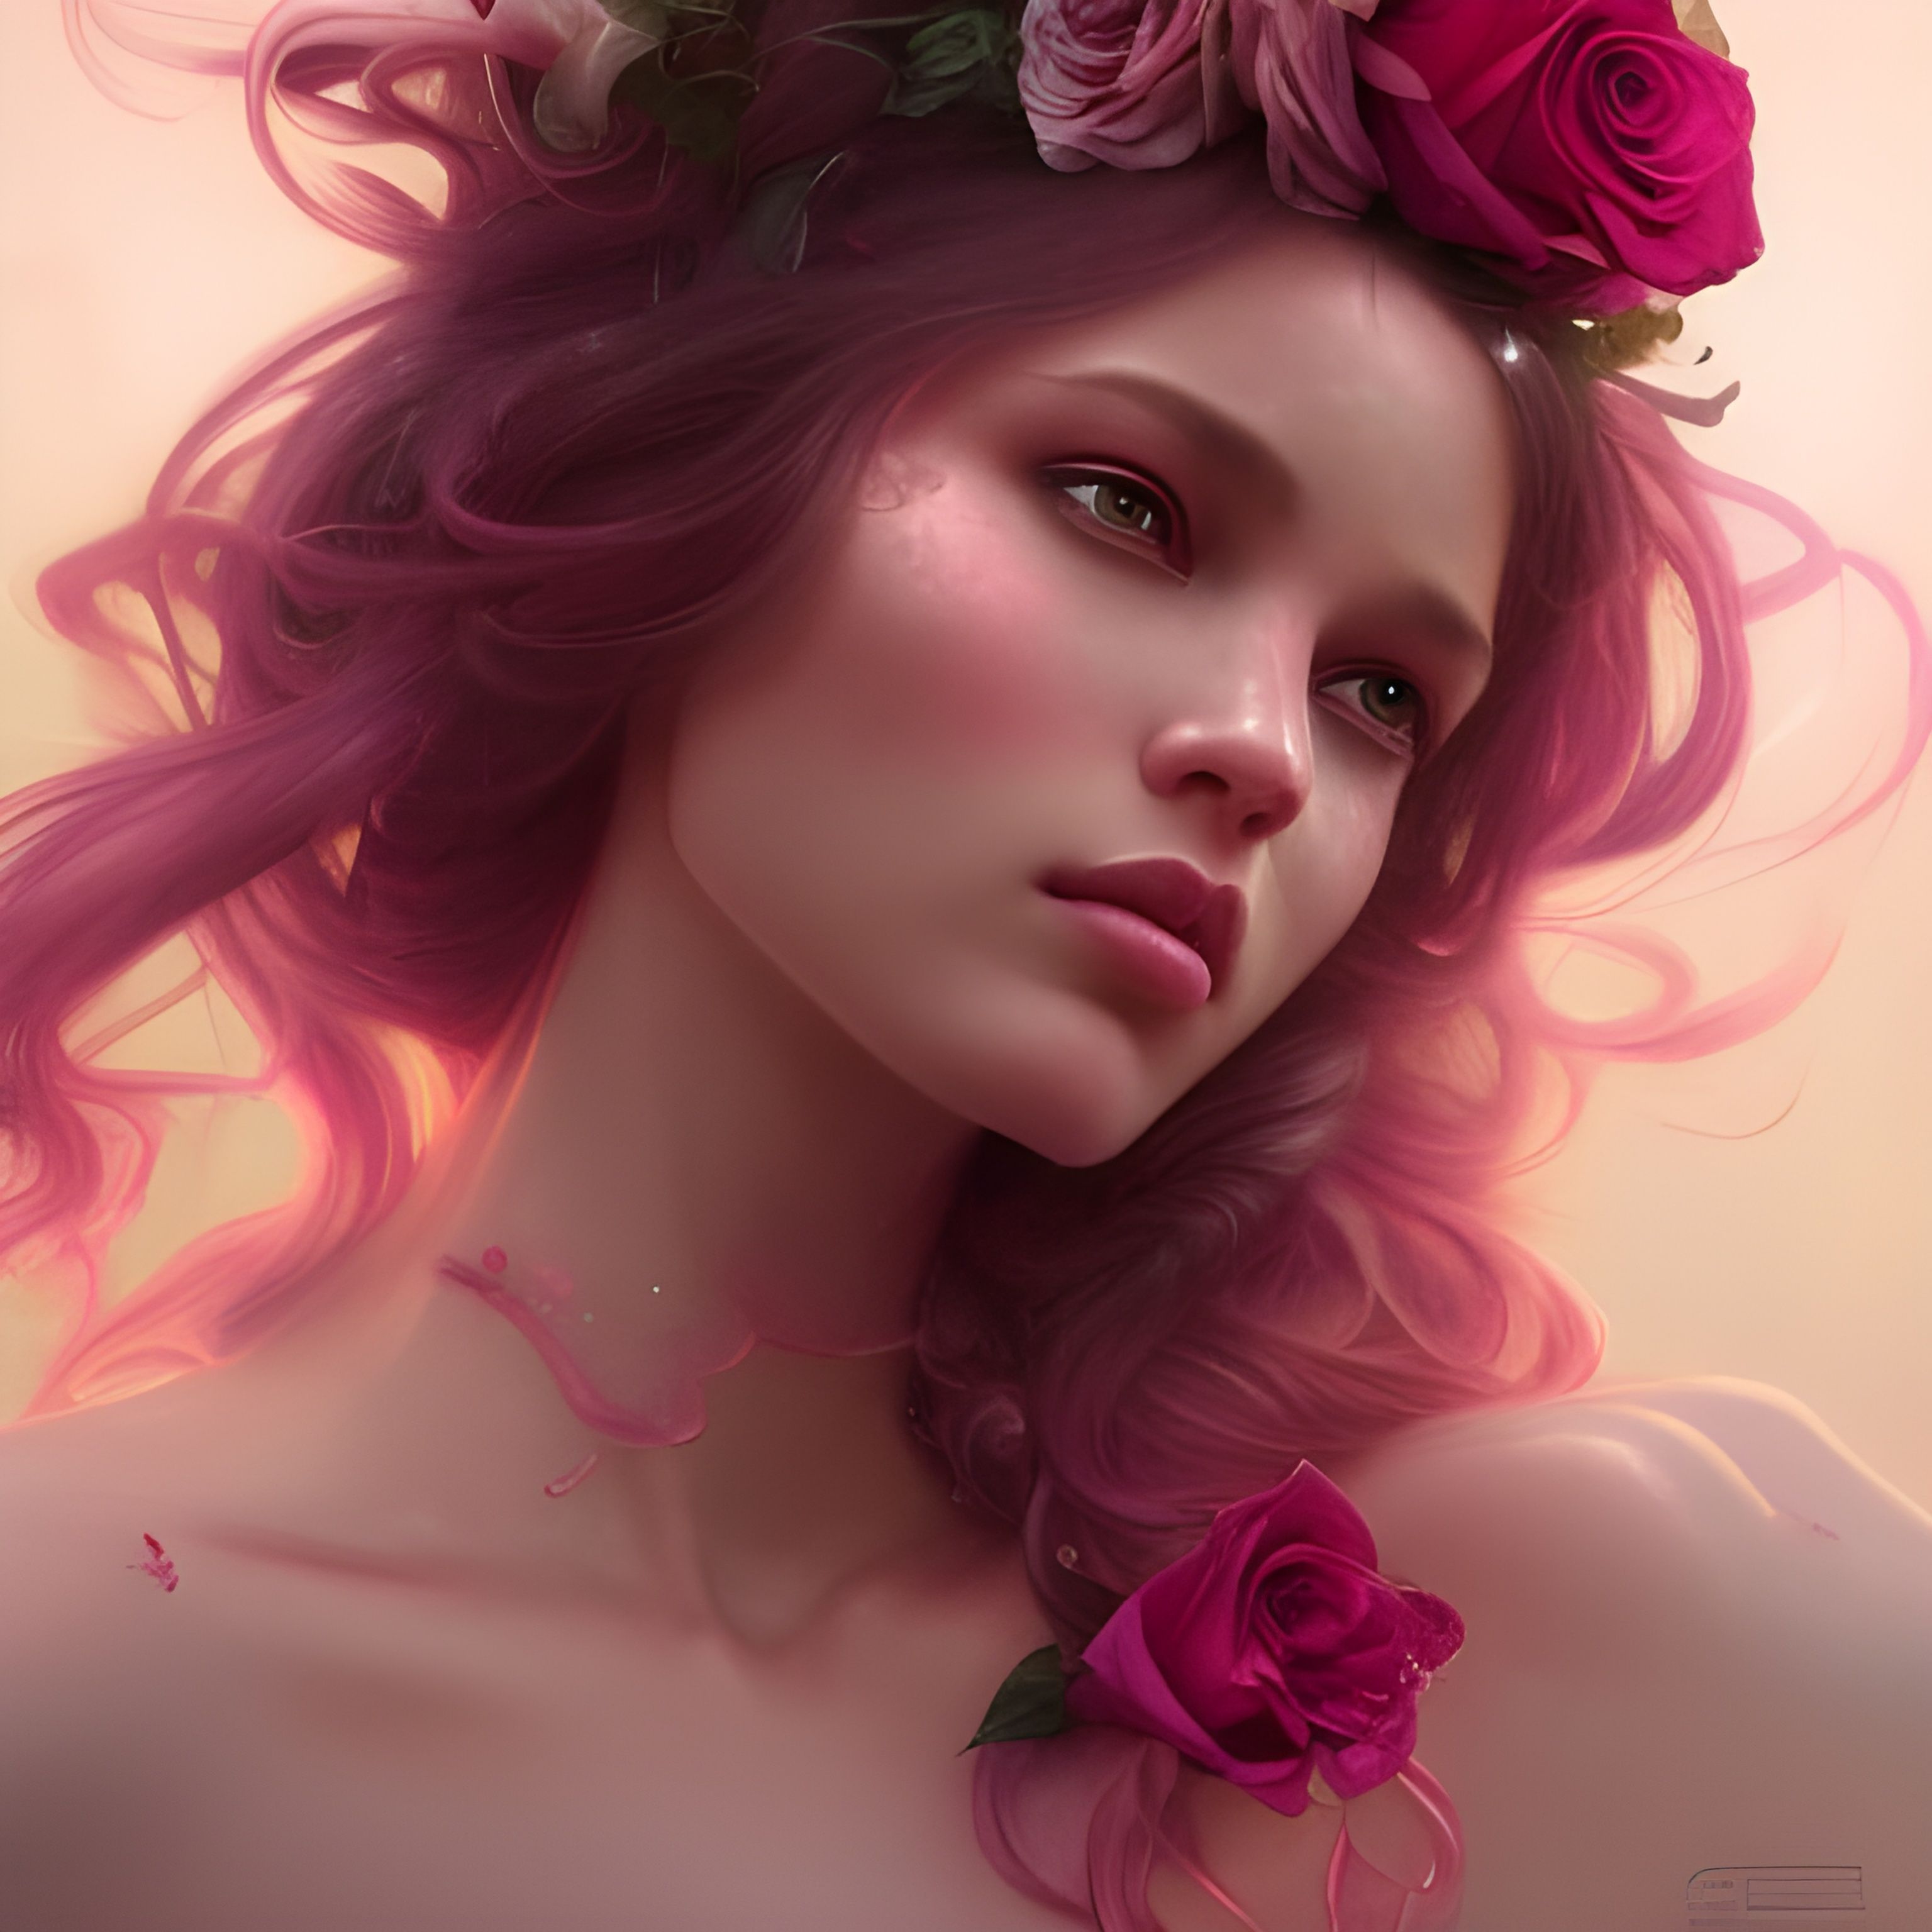 RoseTheFrikiArtist - Hobbyist, Digital Artist